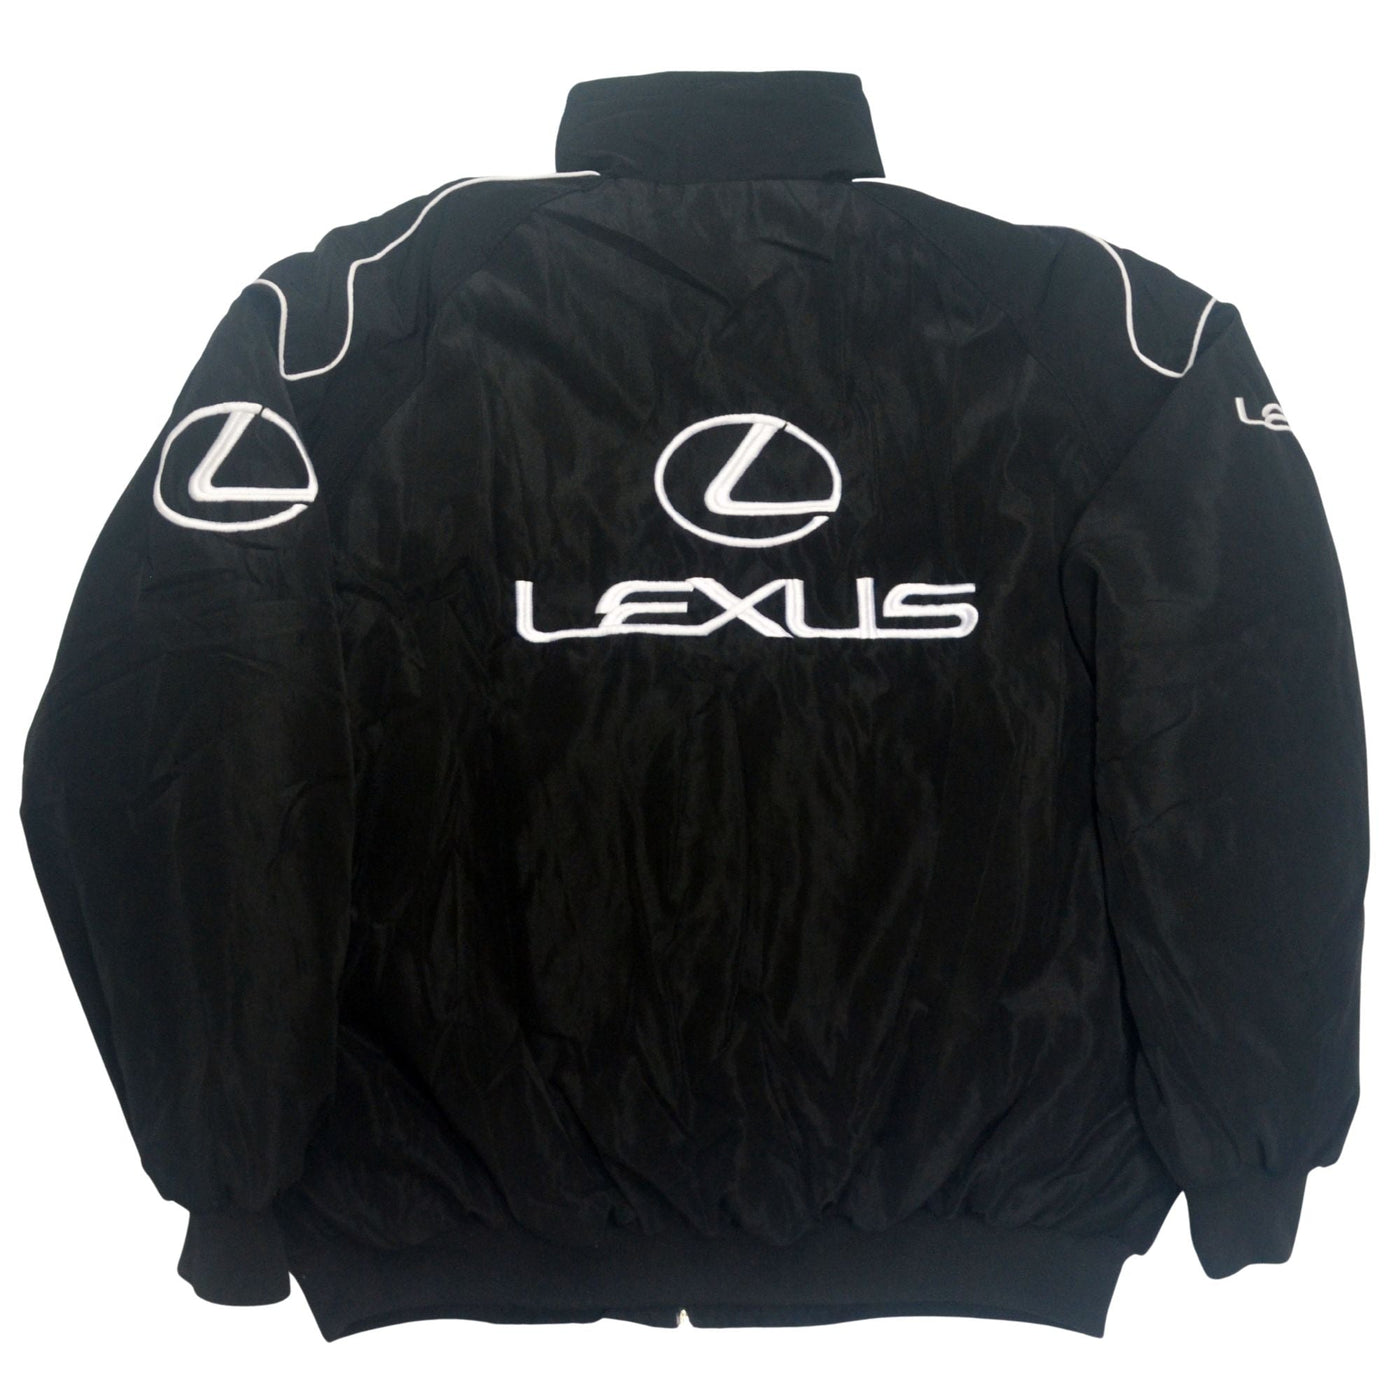 Vintage Racing L3xus Jacket